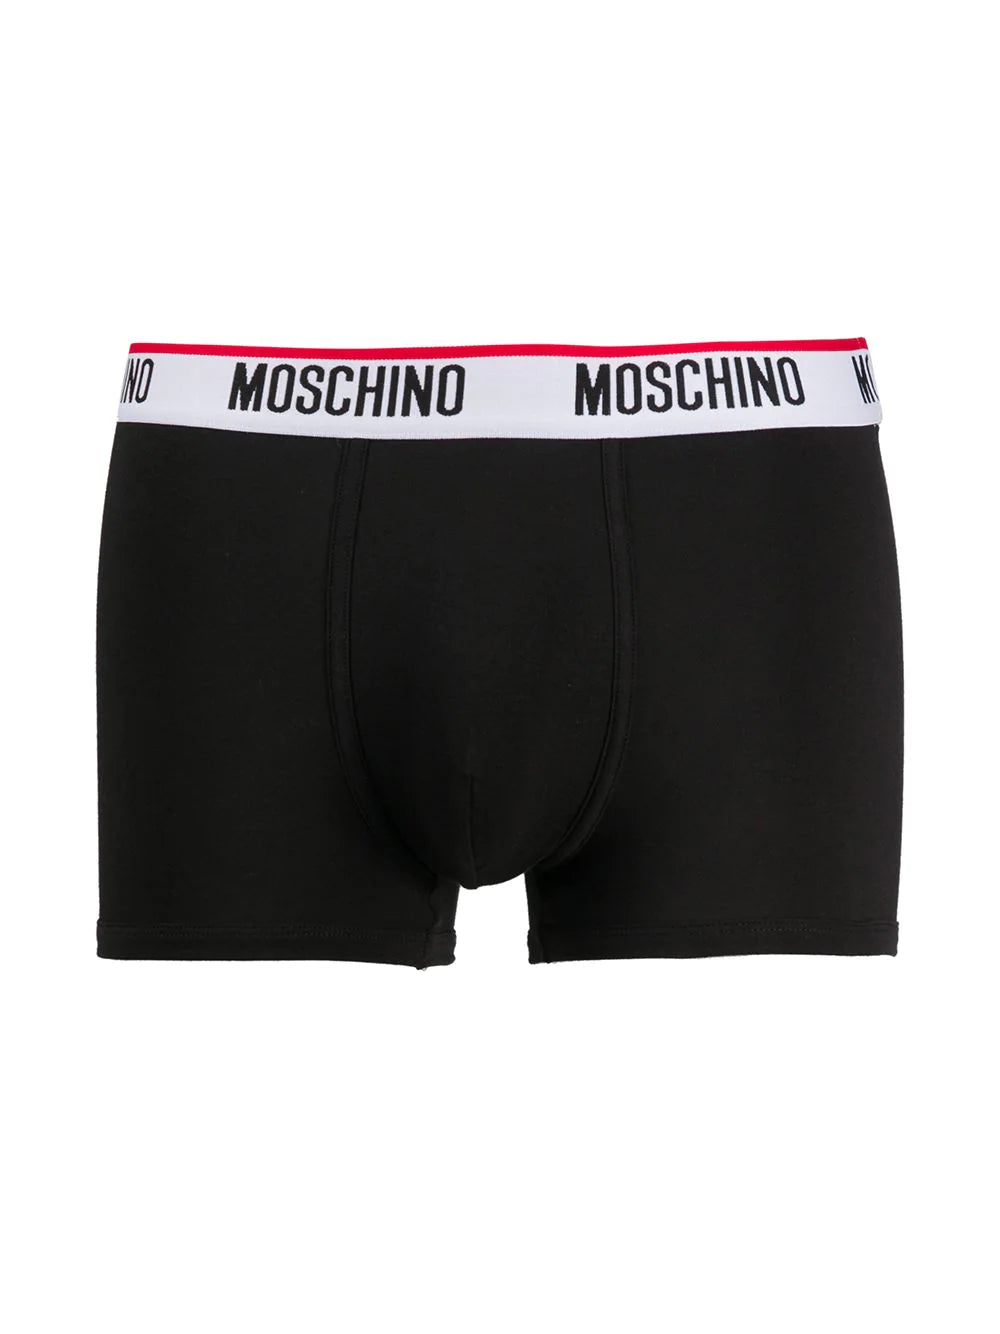 Moschino Black Logo Trunk Bi-Pack